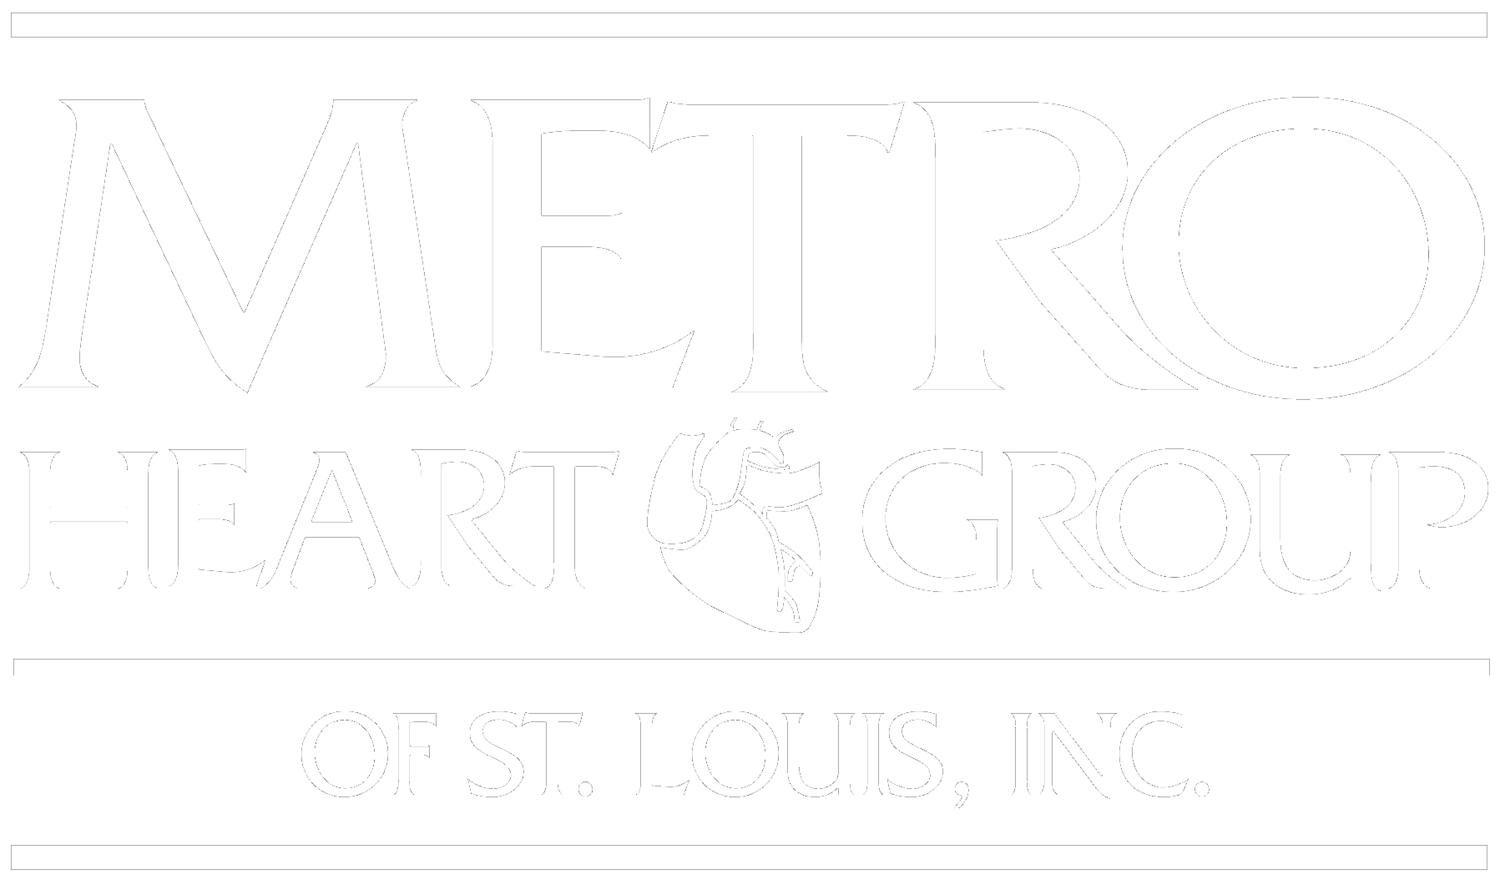 Metro Heart Group